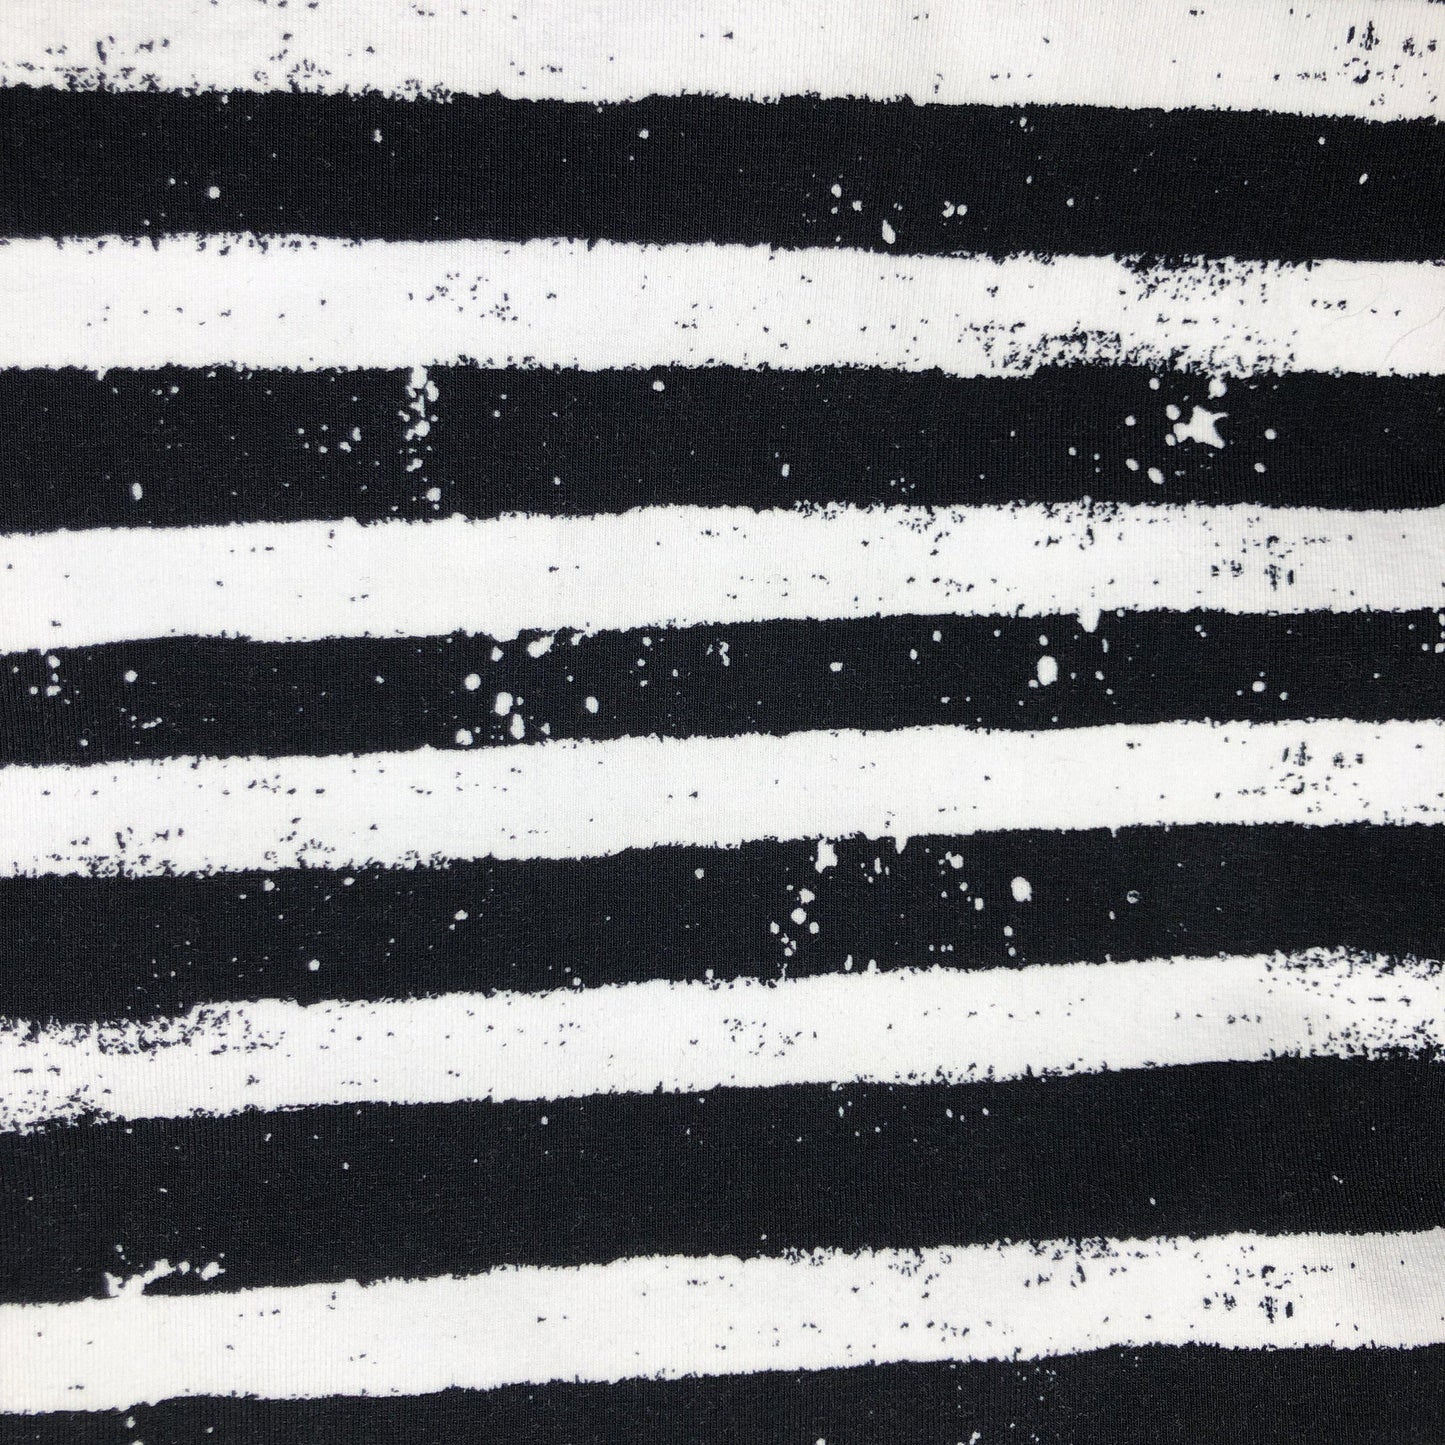 black & white stripes with grungy splashes